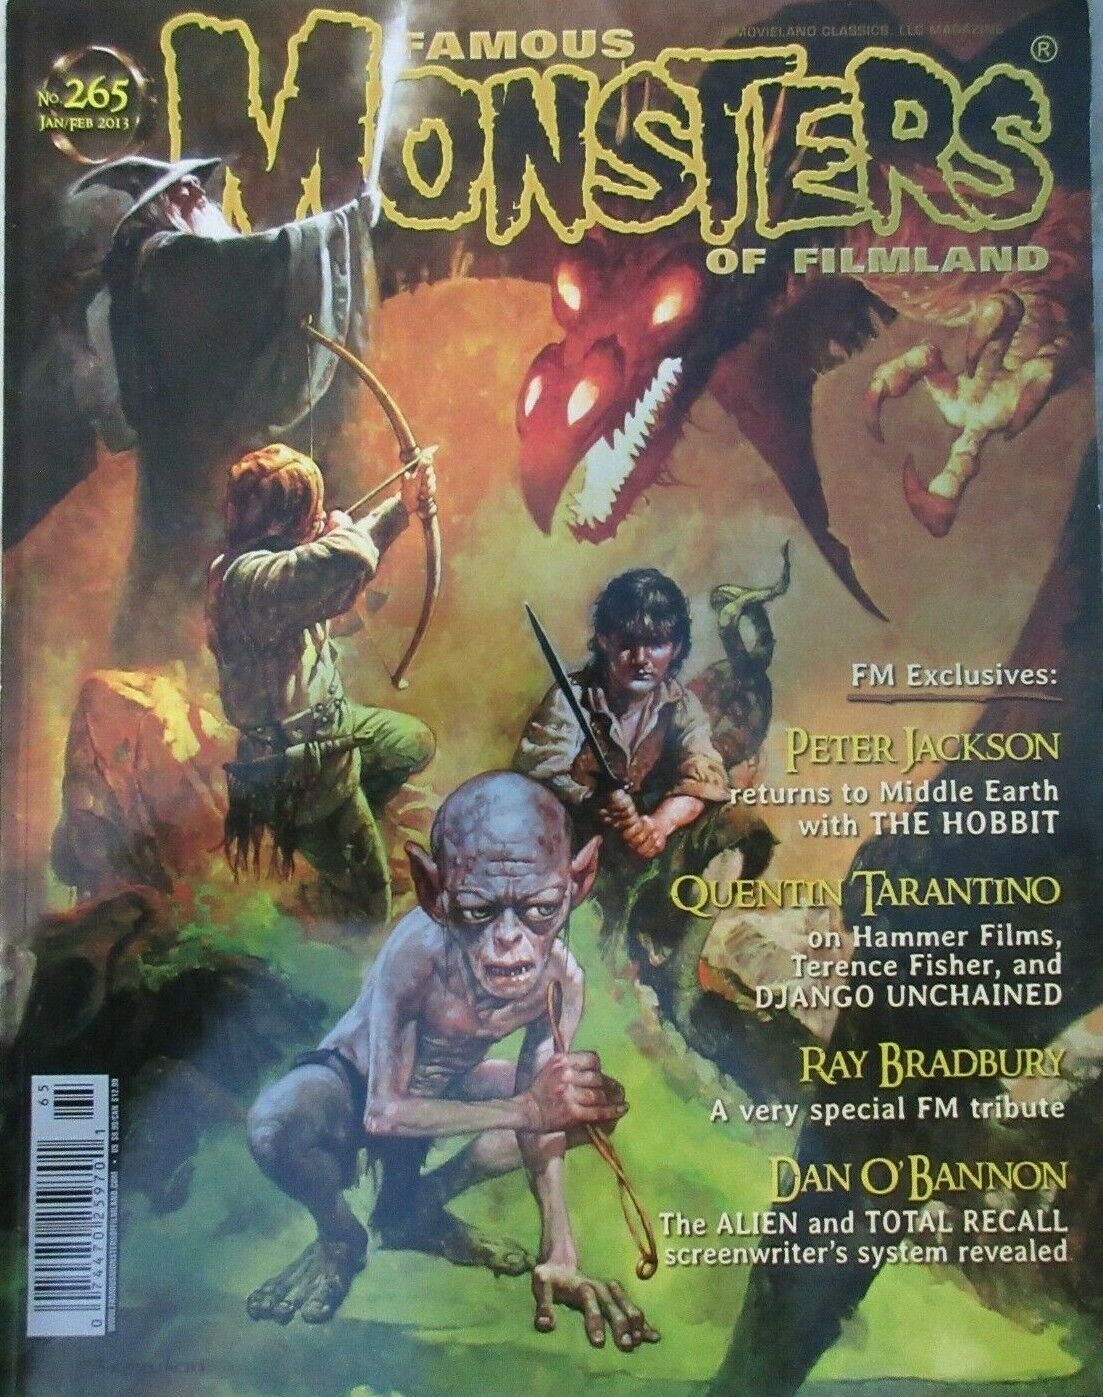 Famous Monsters of Filmland #265 January / February 2013 Magazine